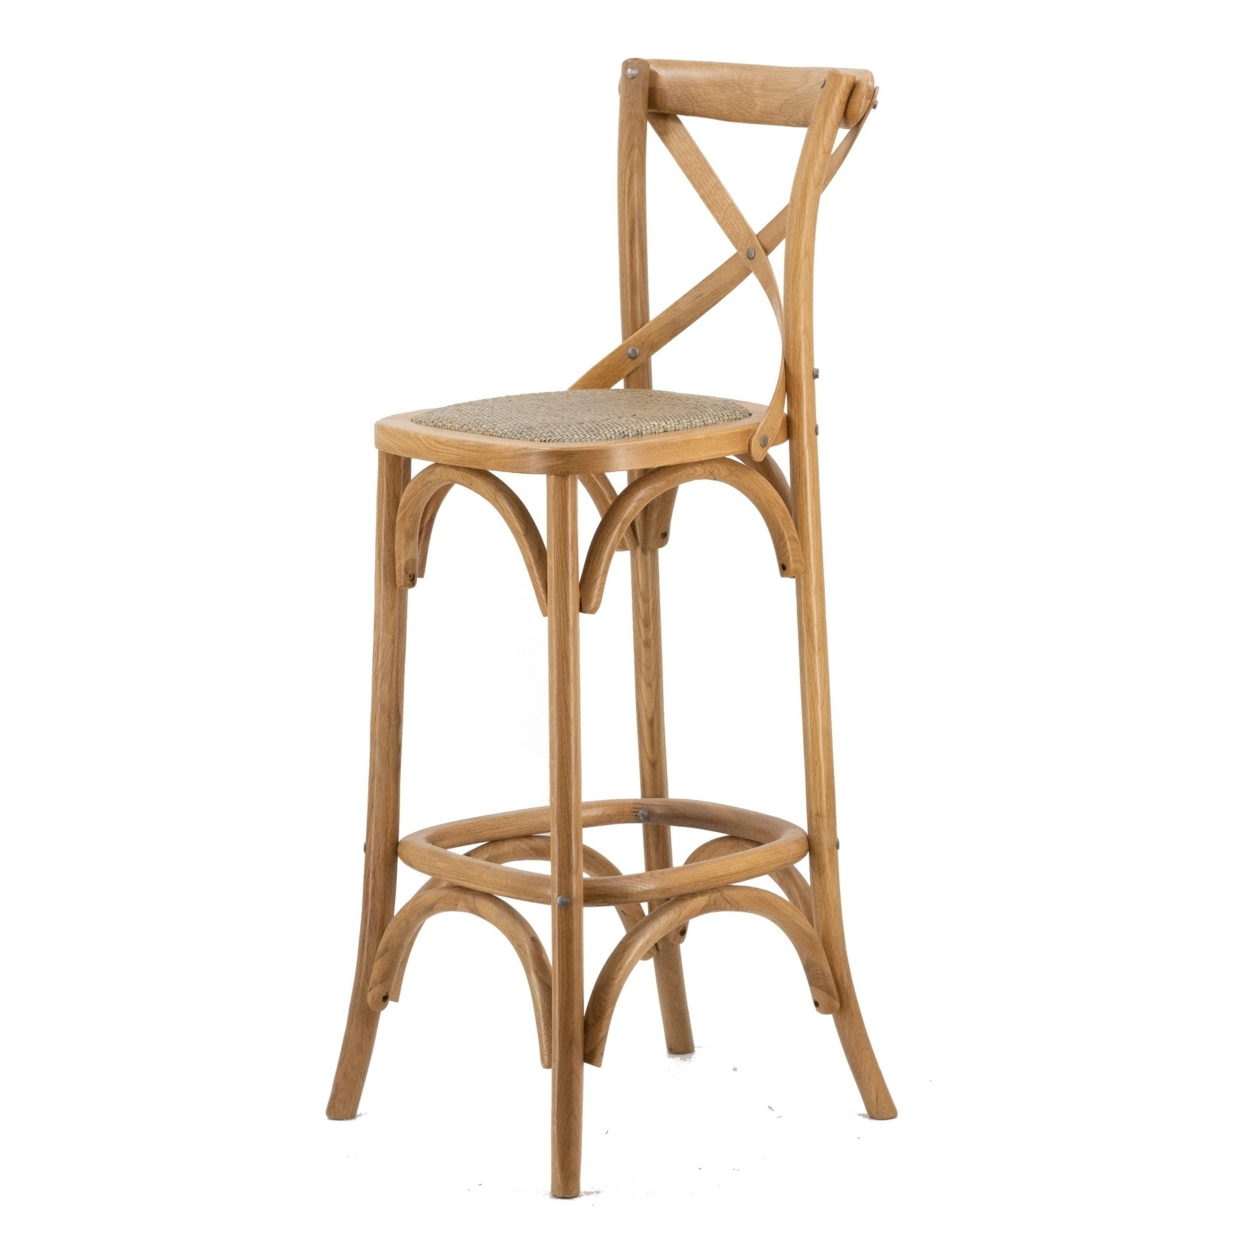 21 Inch Oak Wood Bar Chair, Square Backrest And Foam Seat, Beige, Brown- Saltoro Sherpi